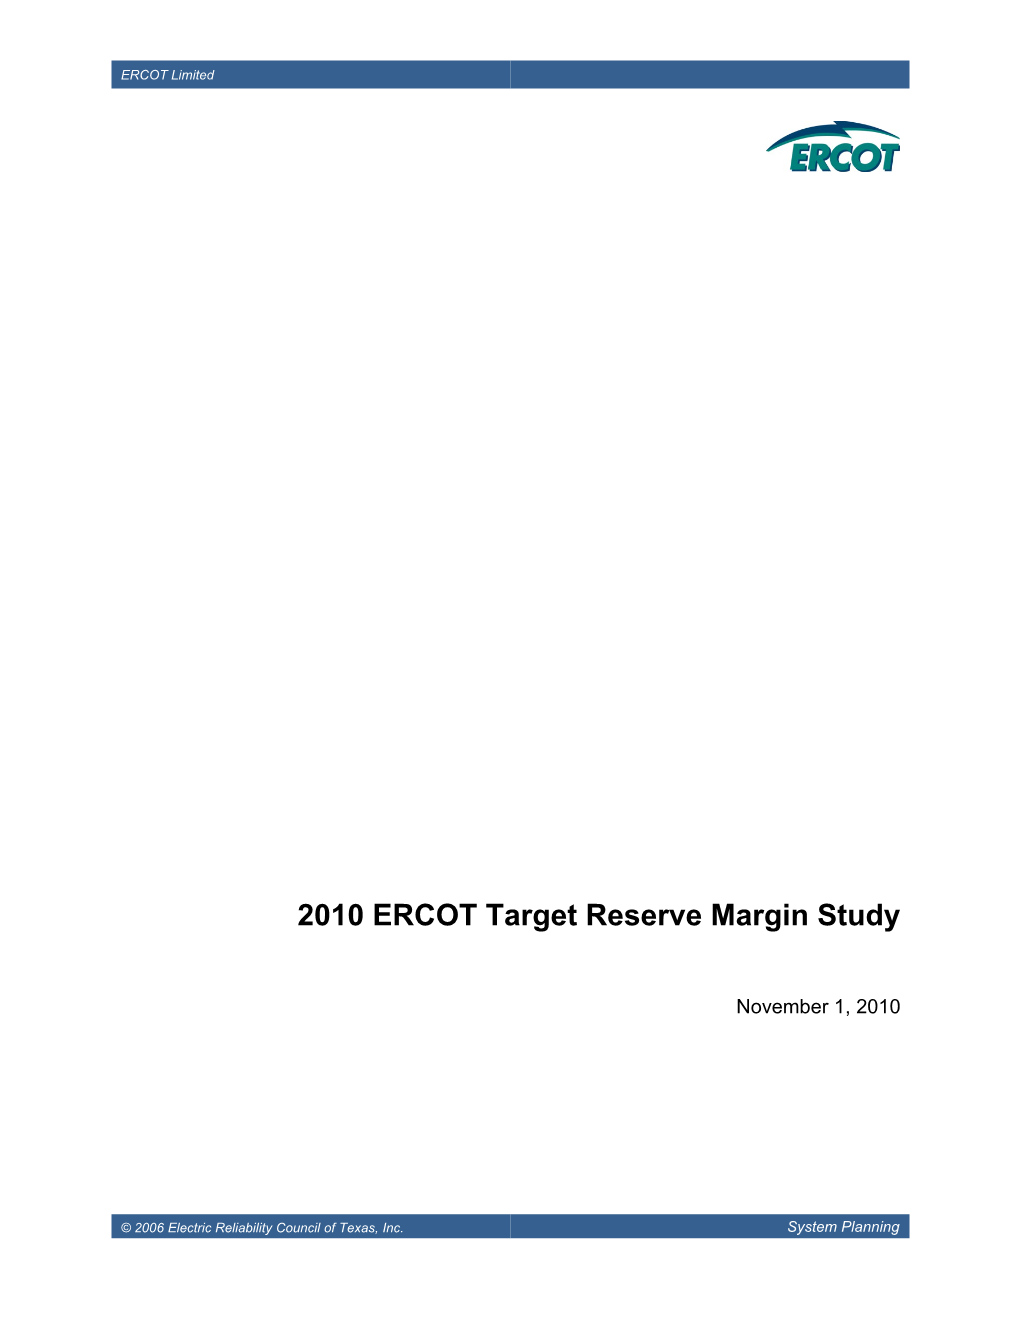 2010 ERCOT Target Reserve Margin Studyercot Limited